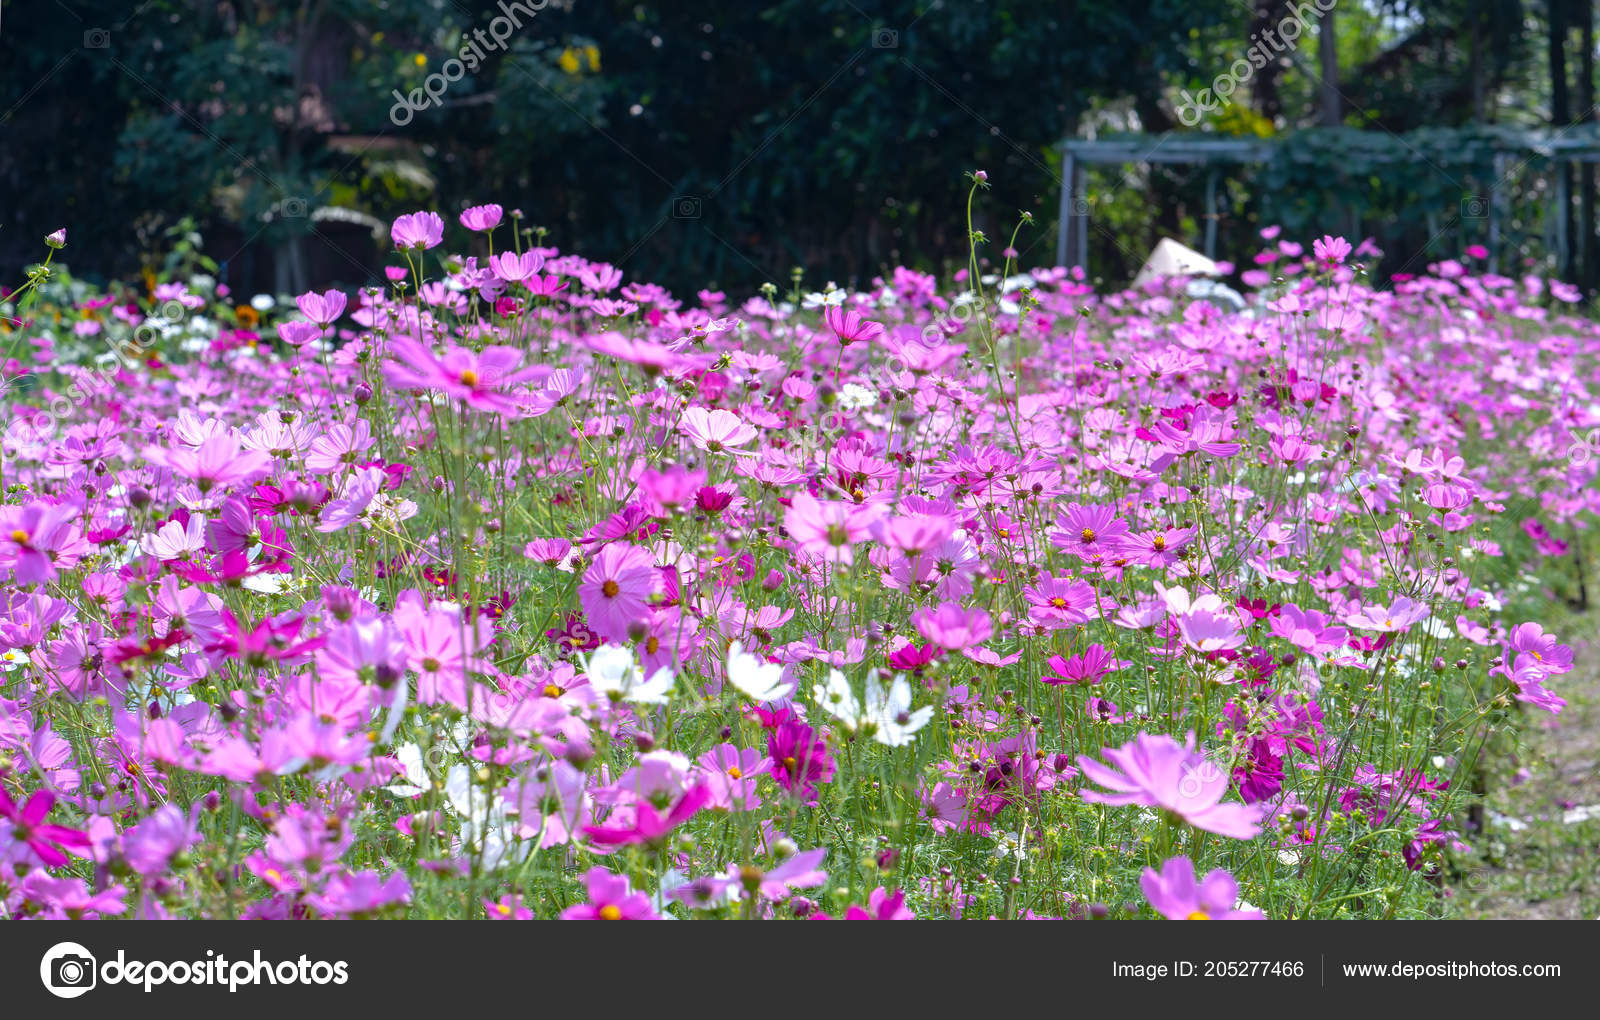 Cosmos Bipinnatus Flowers Shine Flower Garden Colorful Shimmering Bonsai Beautiful Stock Photo C Huythoai1978 Gmail Com 205277466